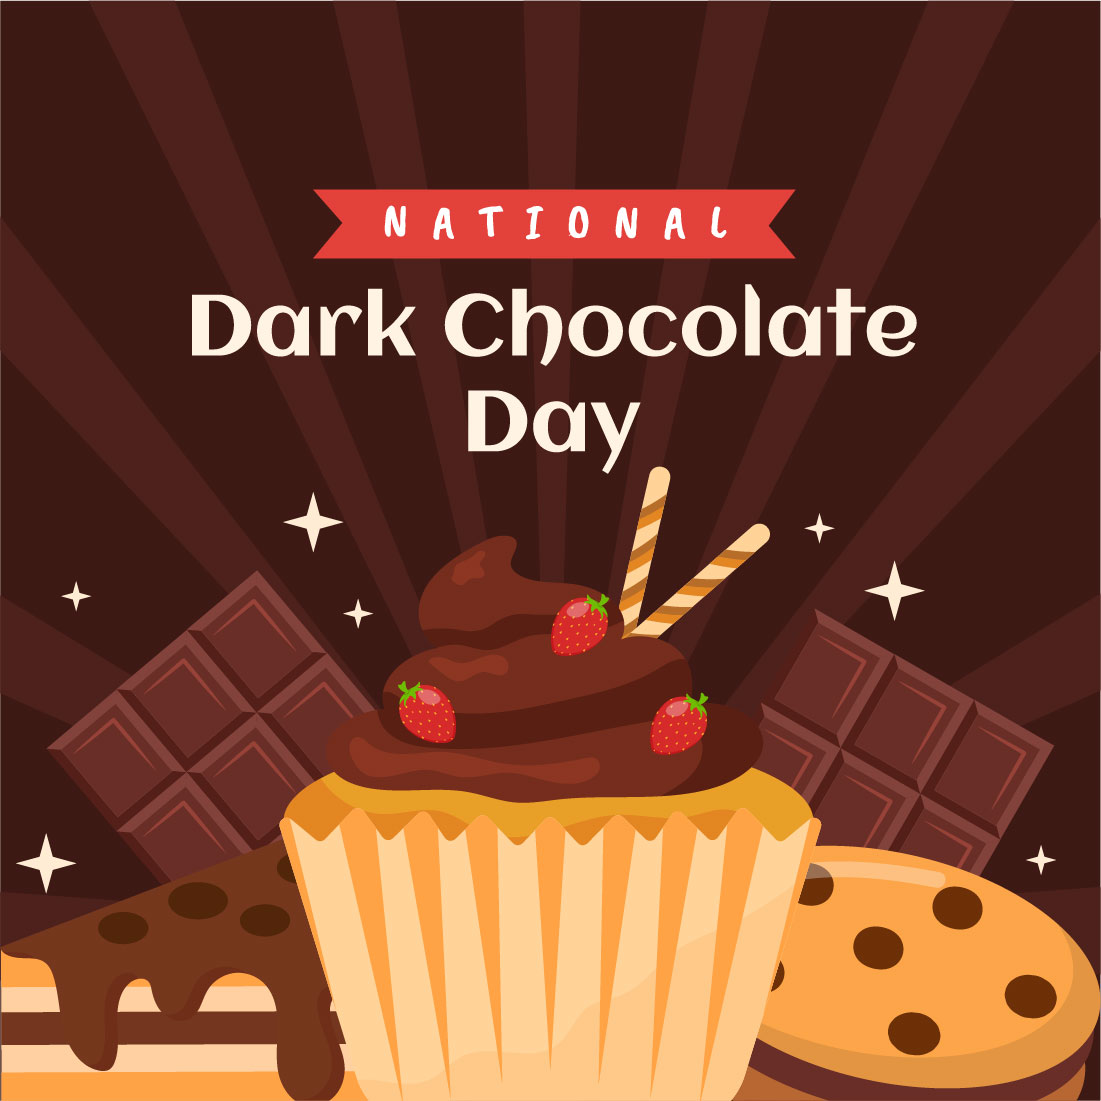 Dark Chocolate Day Graphics cover image.